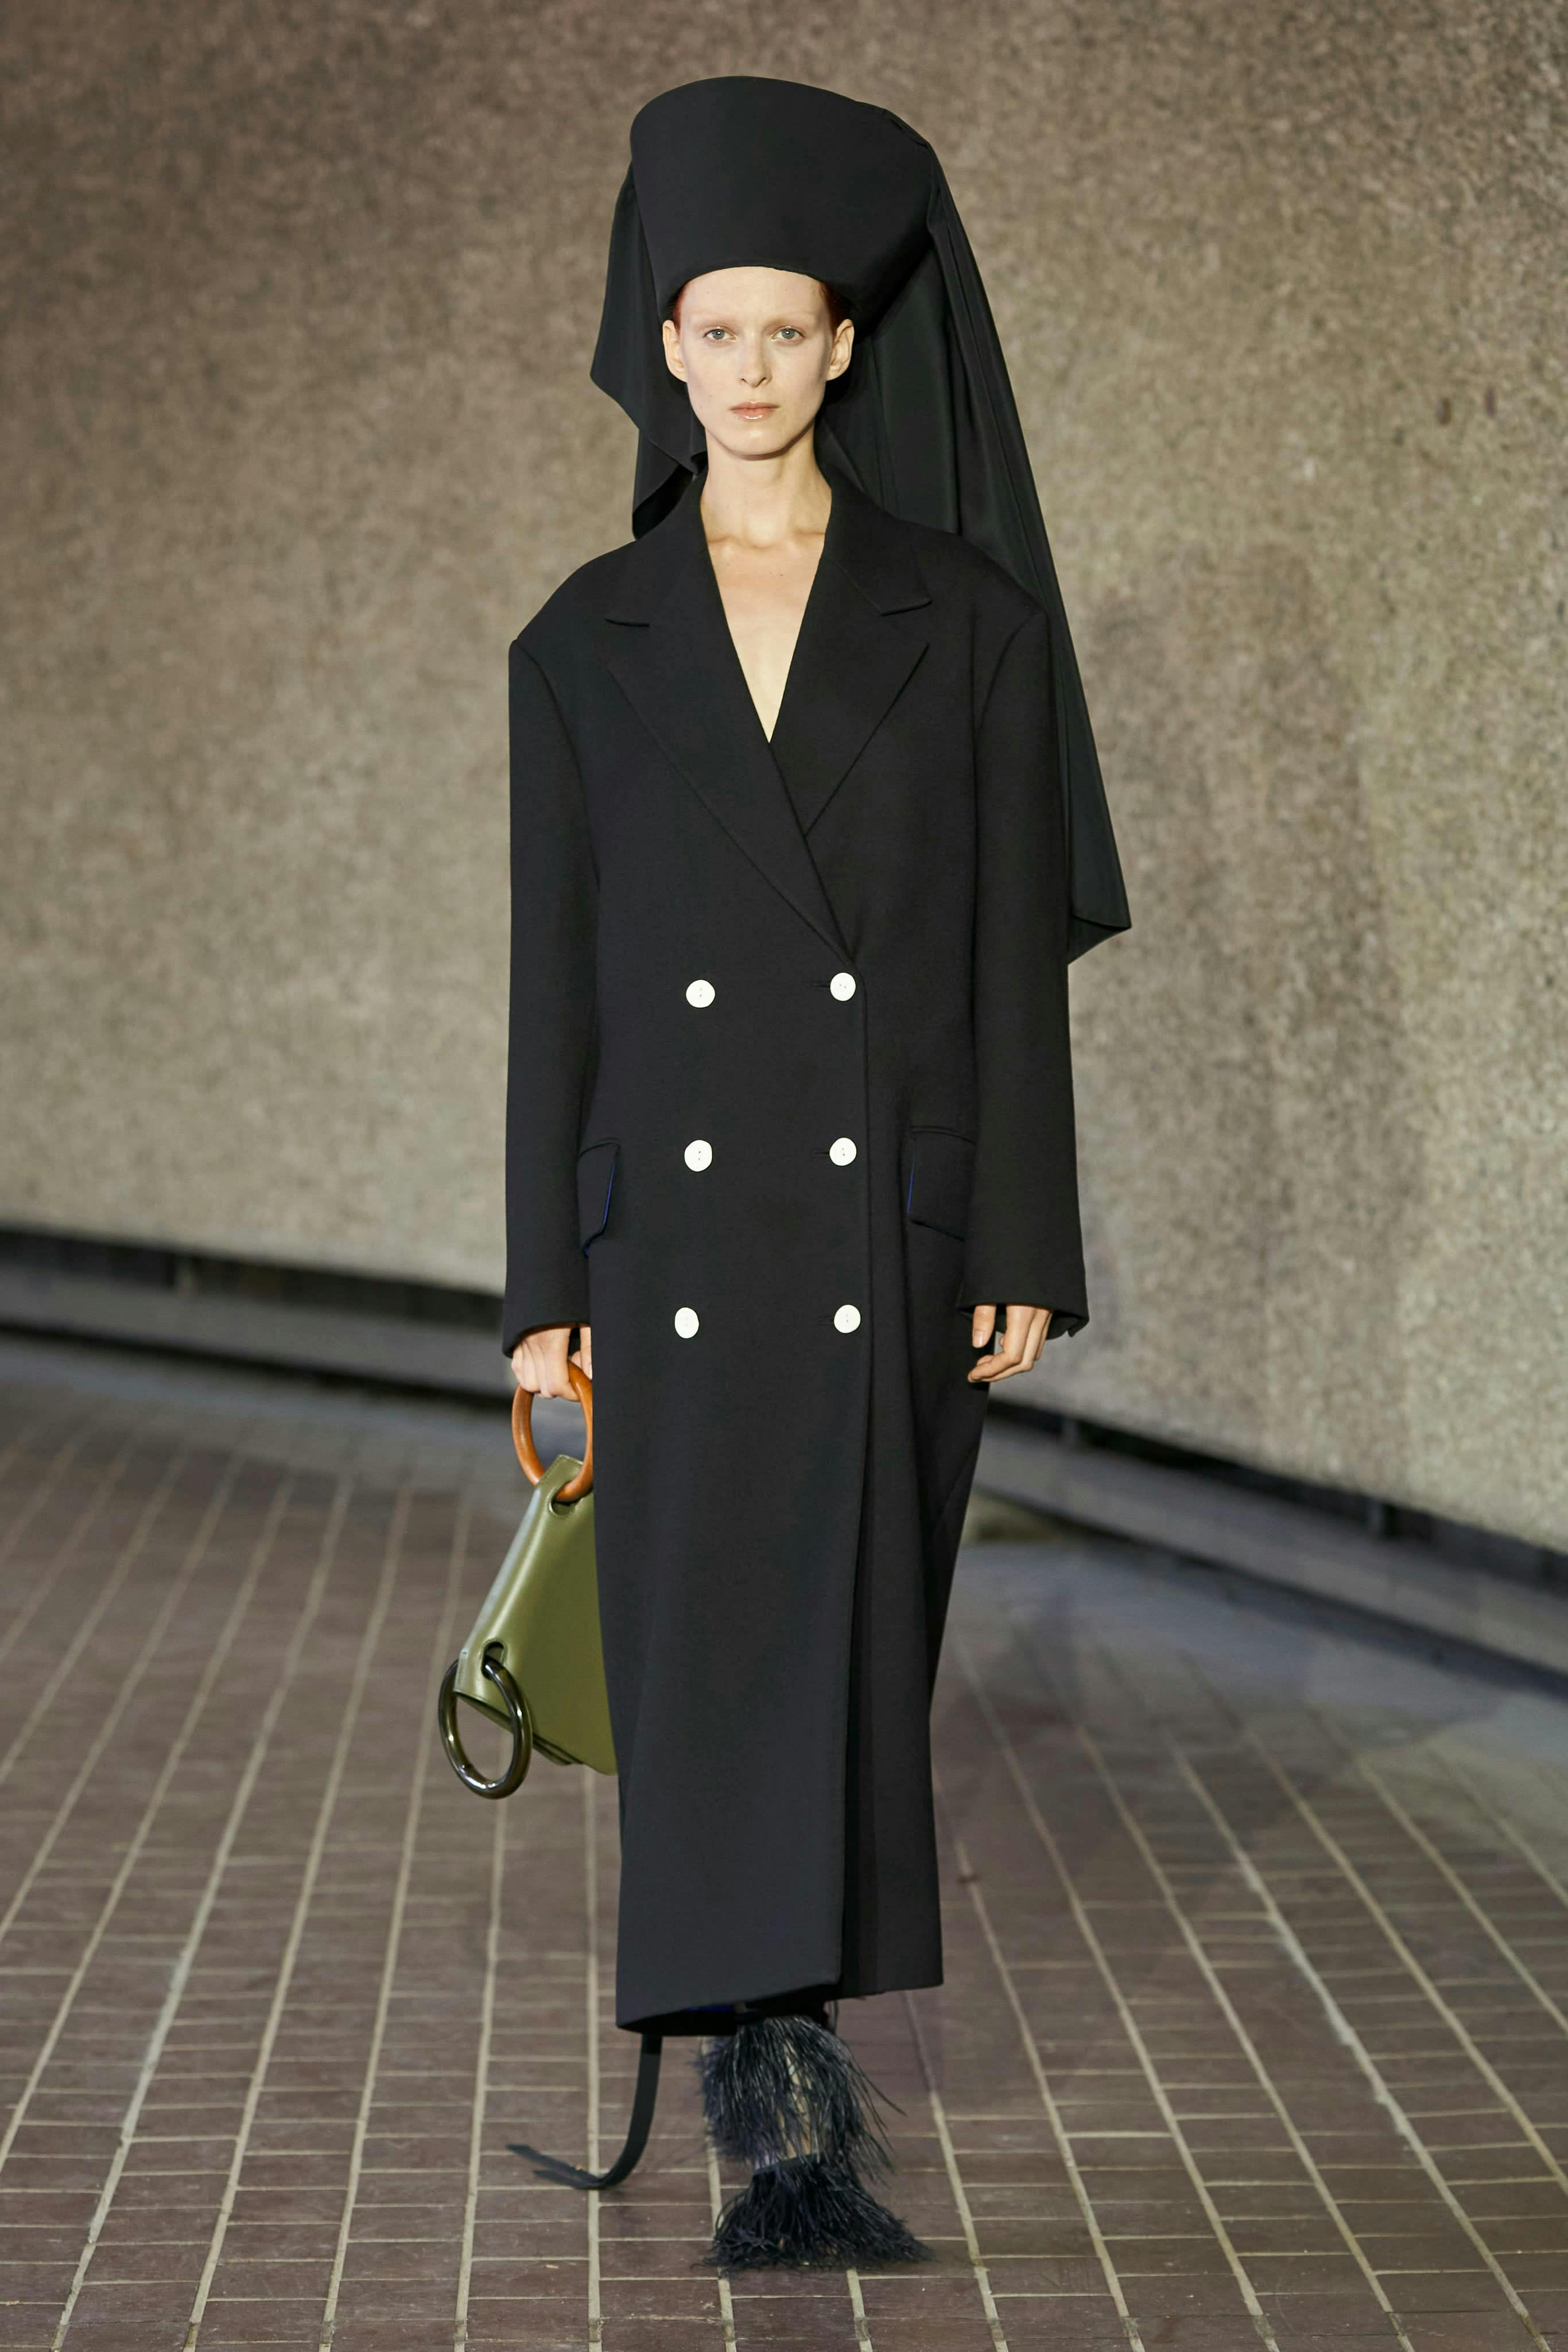 clothing coat overcoat lady person fashion